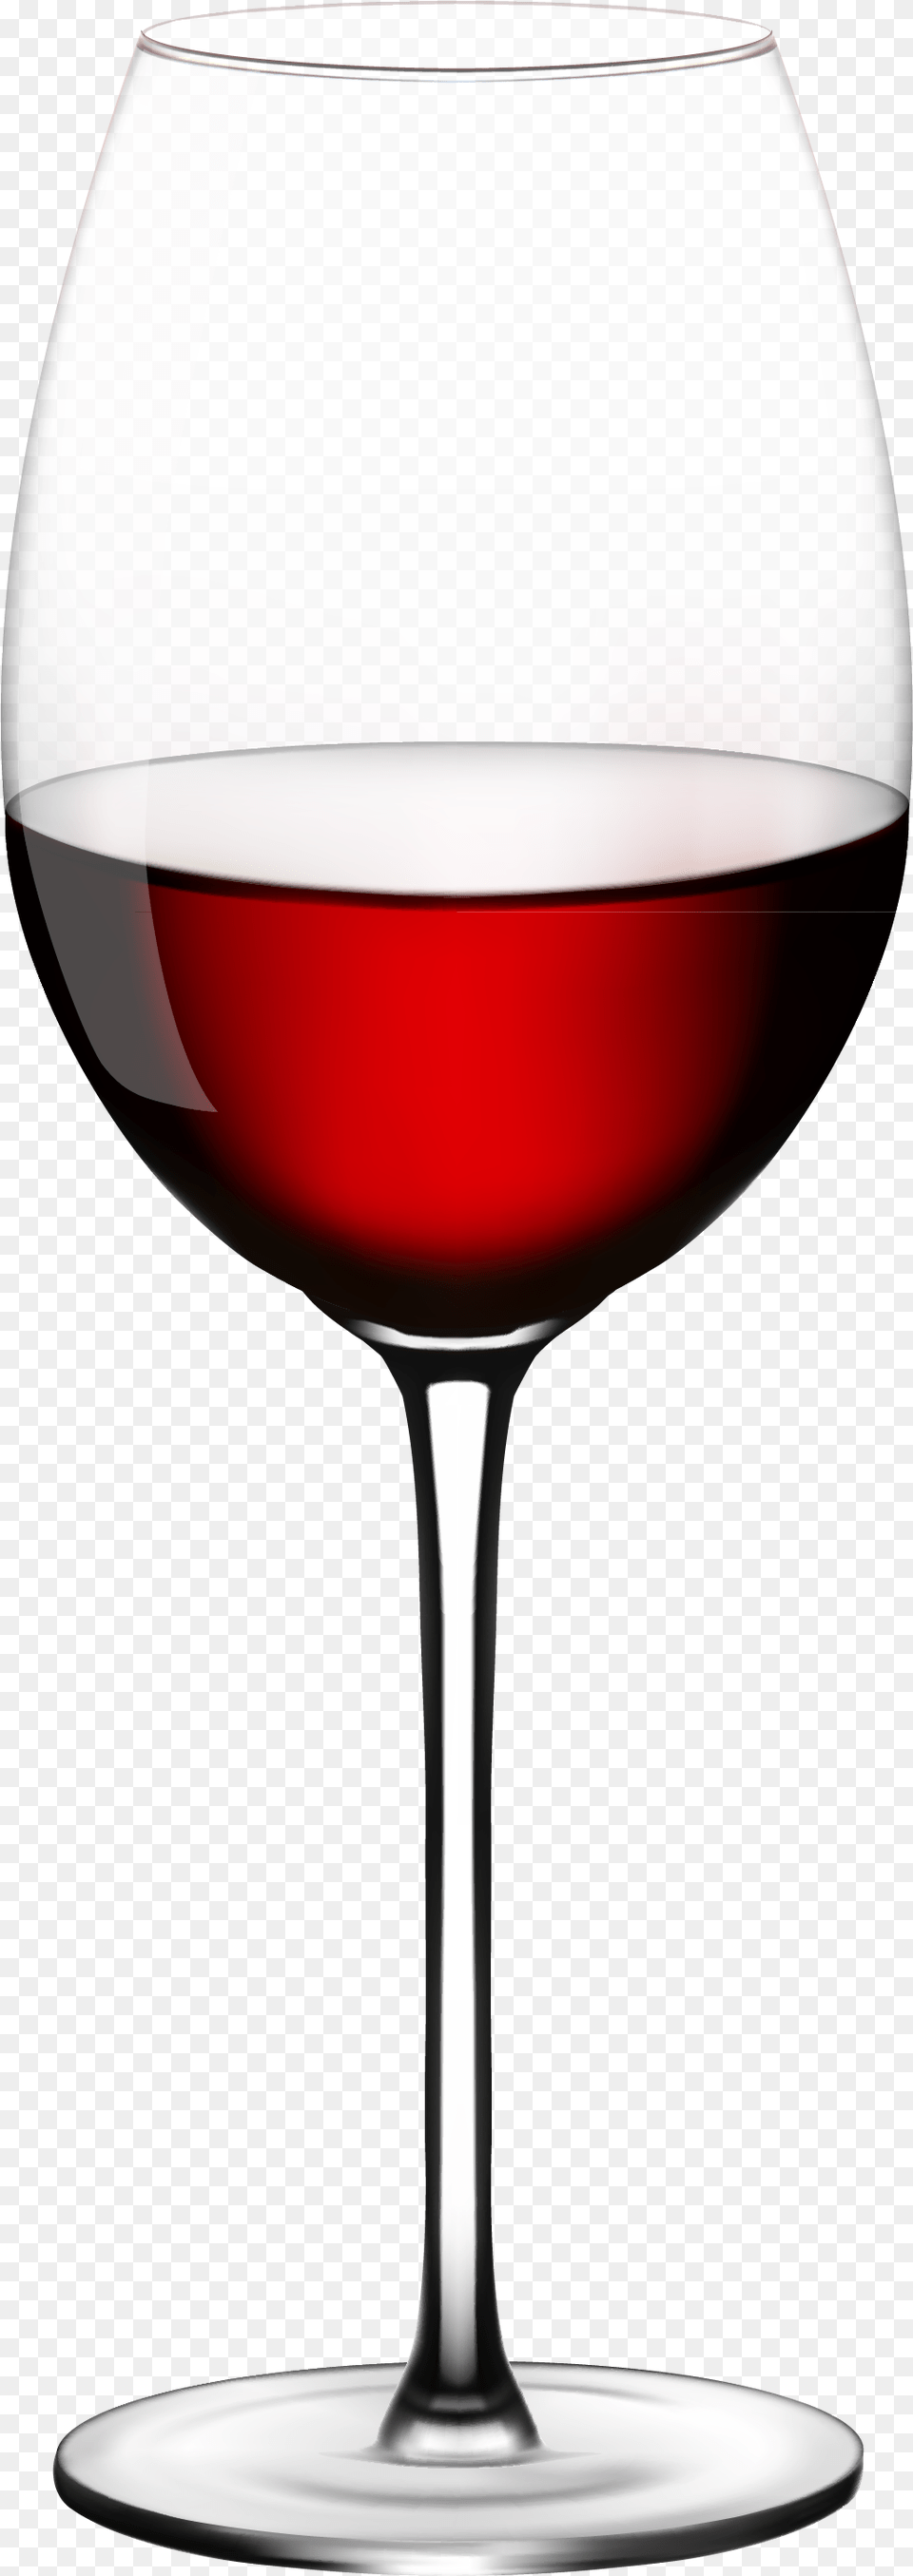 Wine Glasses Clipart Transparent Background Transparent Wine Glass, Alcohol, Beverage, Liquor, Red Wine Png